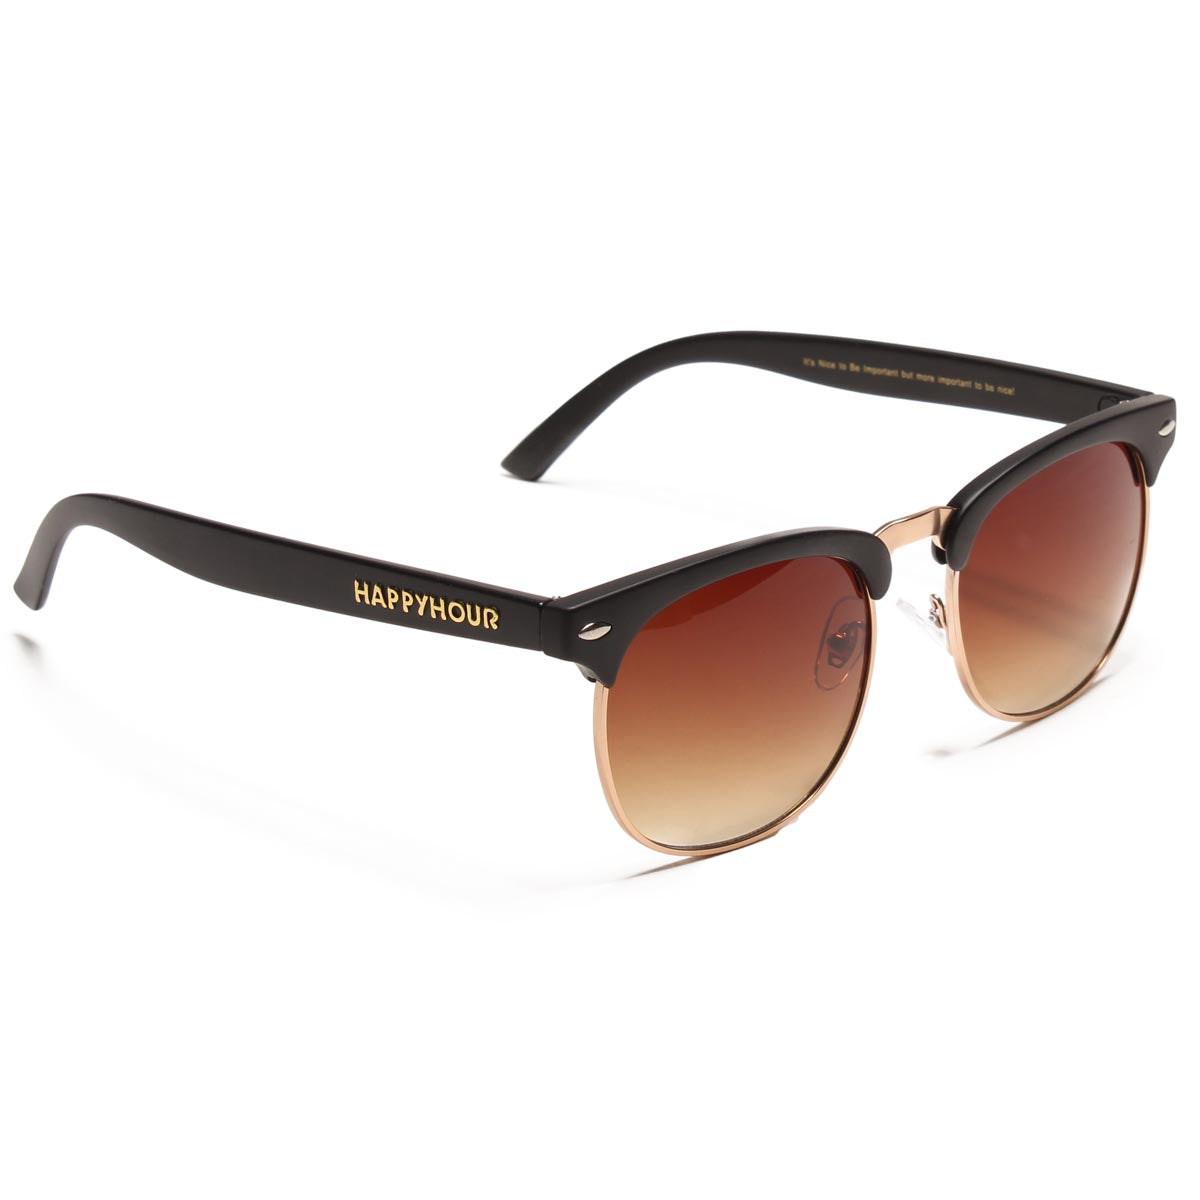 Happy Hour G2 Sunglasses - Matte Black/Amber Fade image 1